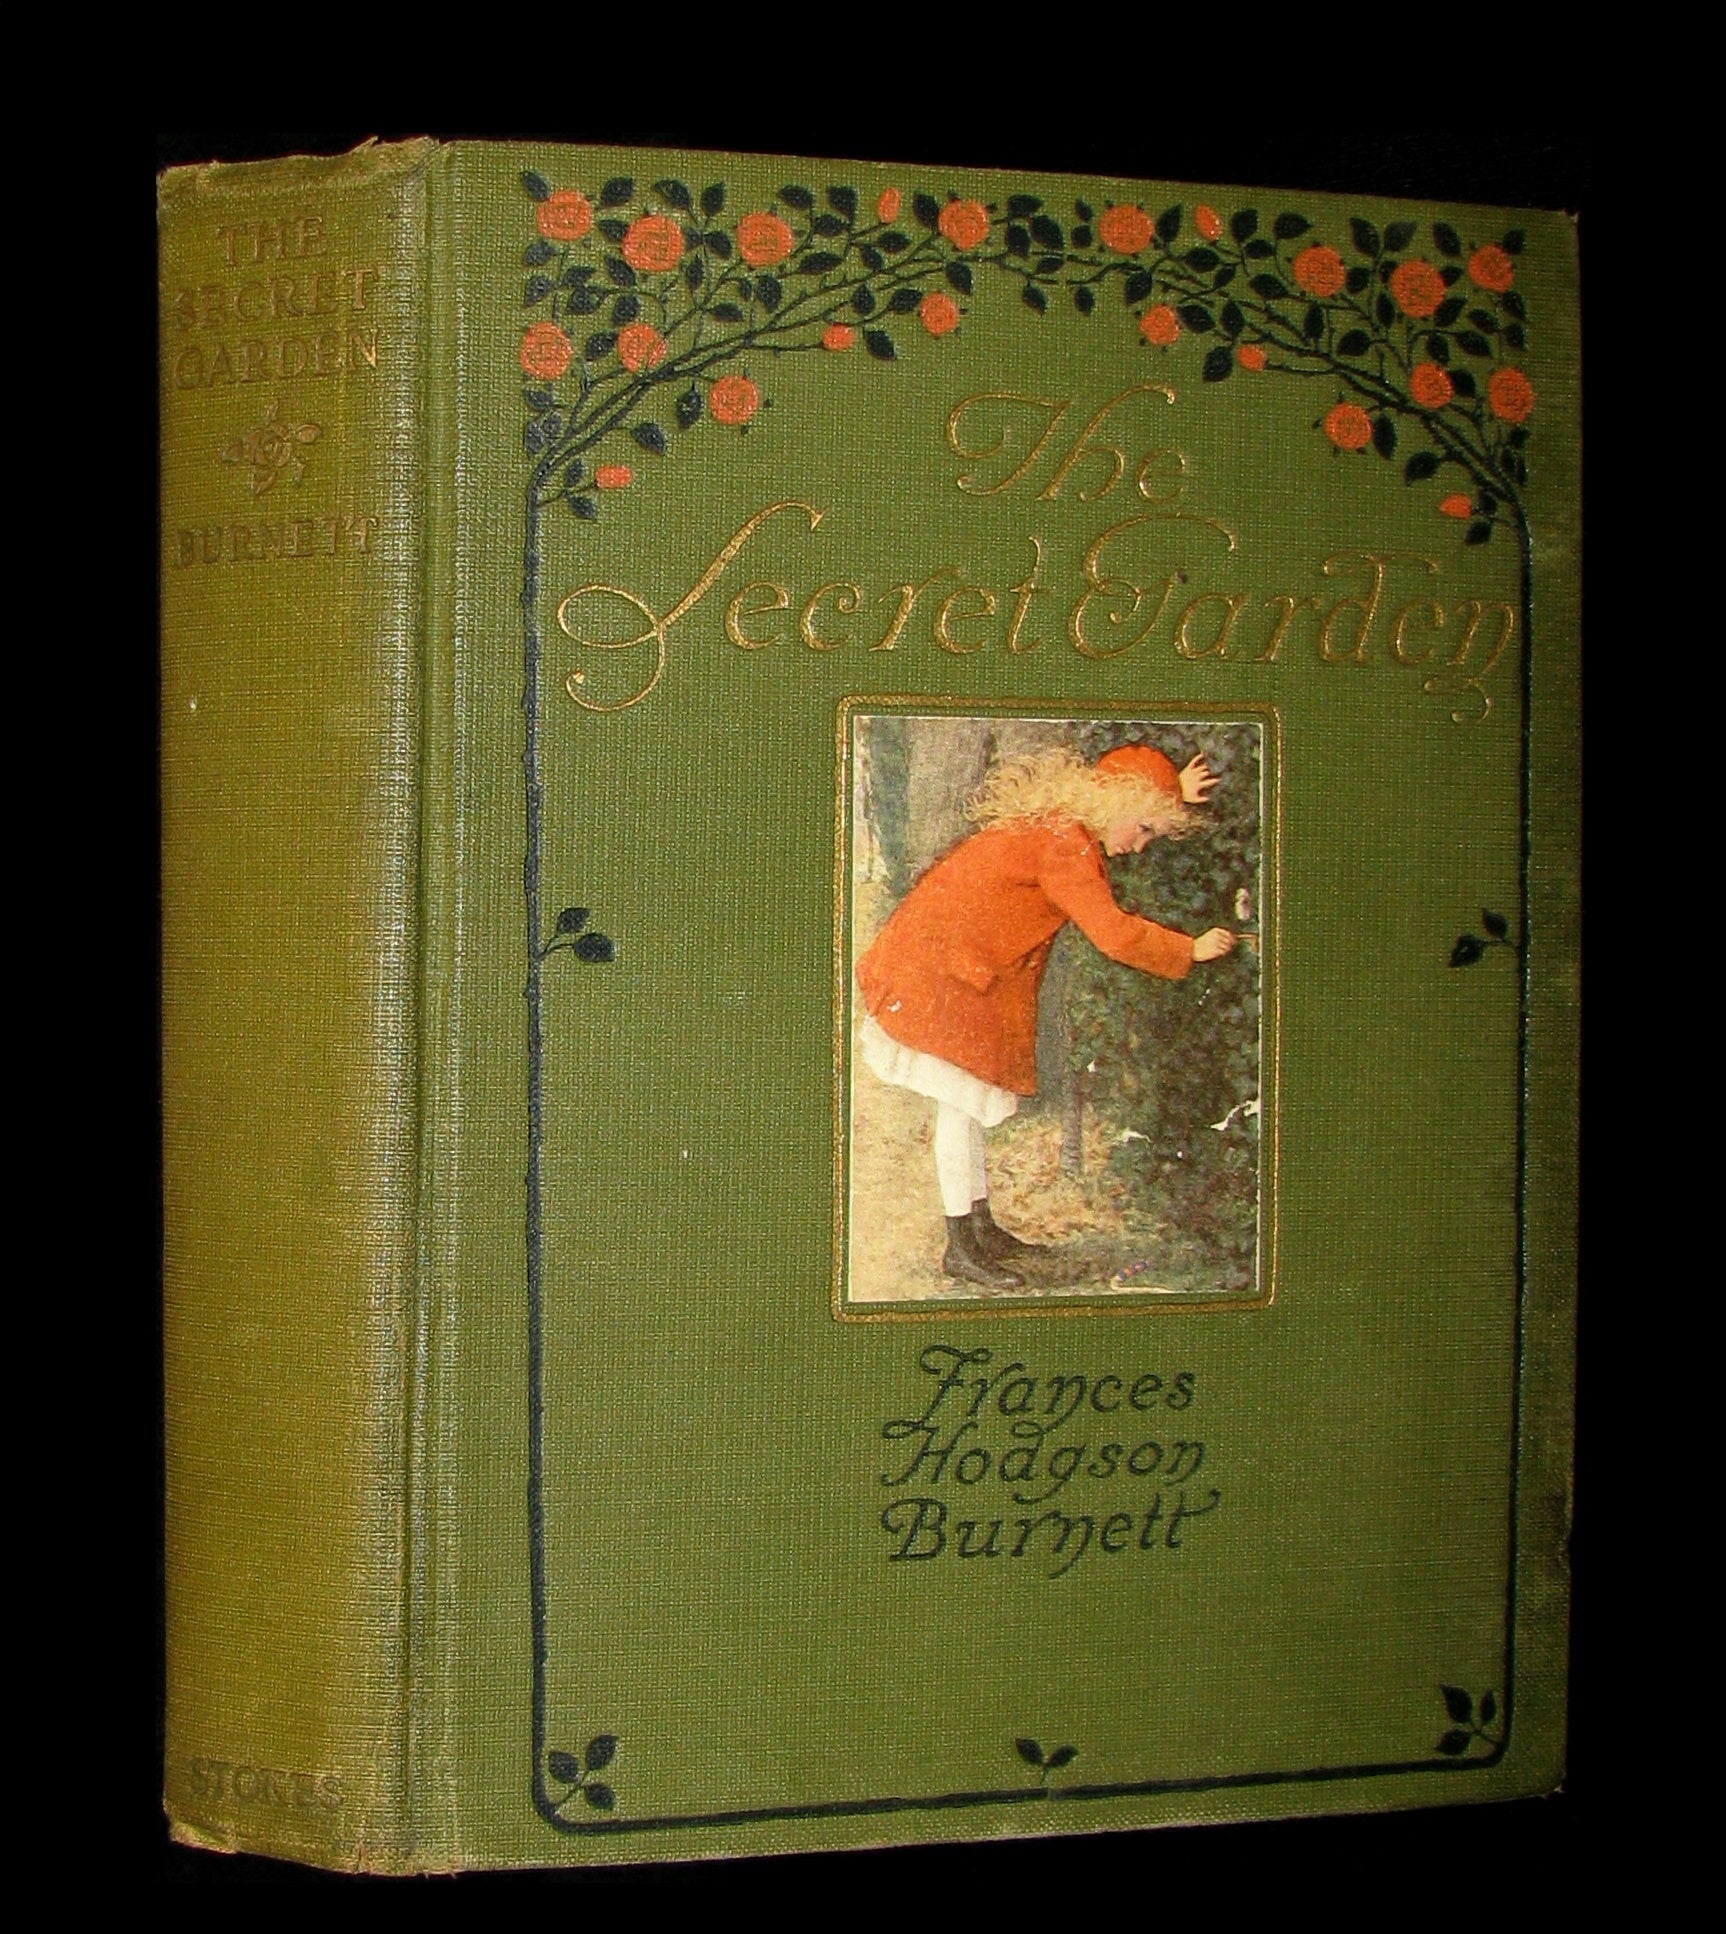 1911 Rare First Edition Book The Secret Garden By Frances